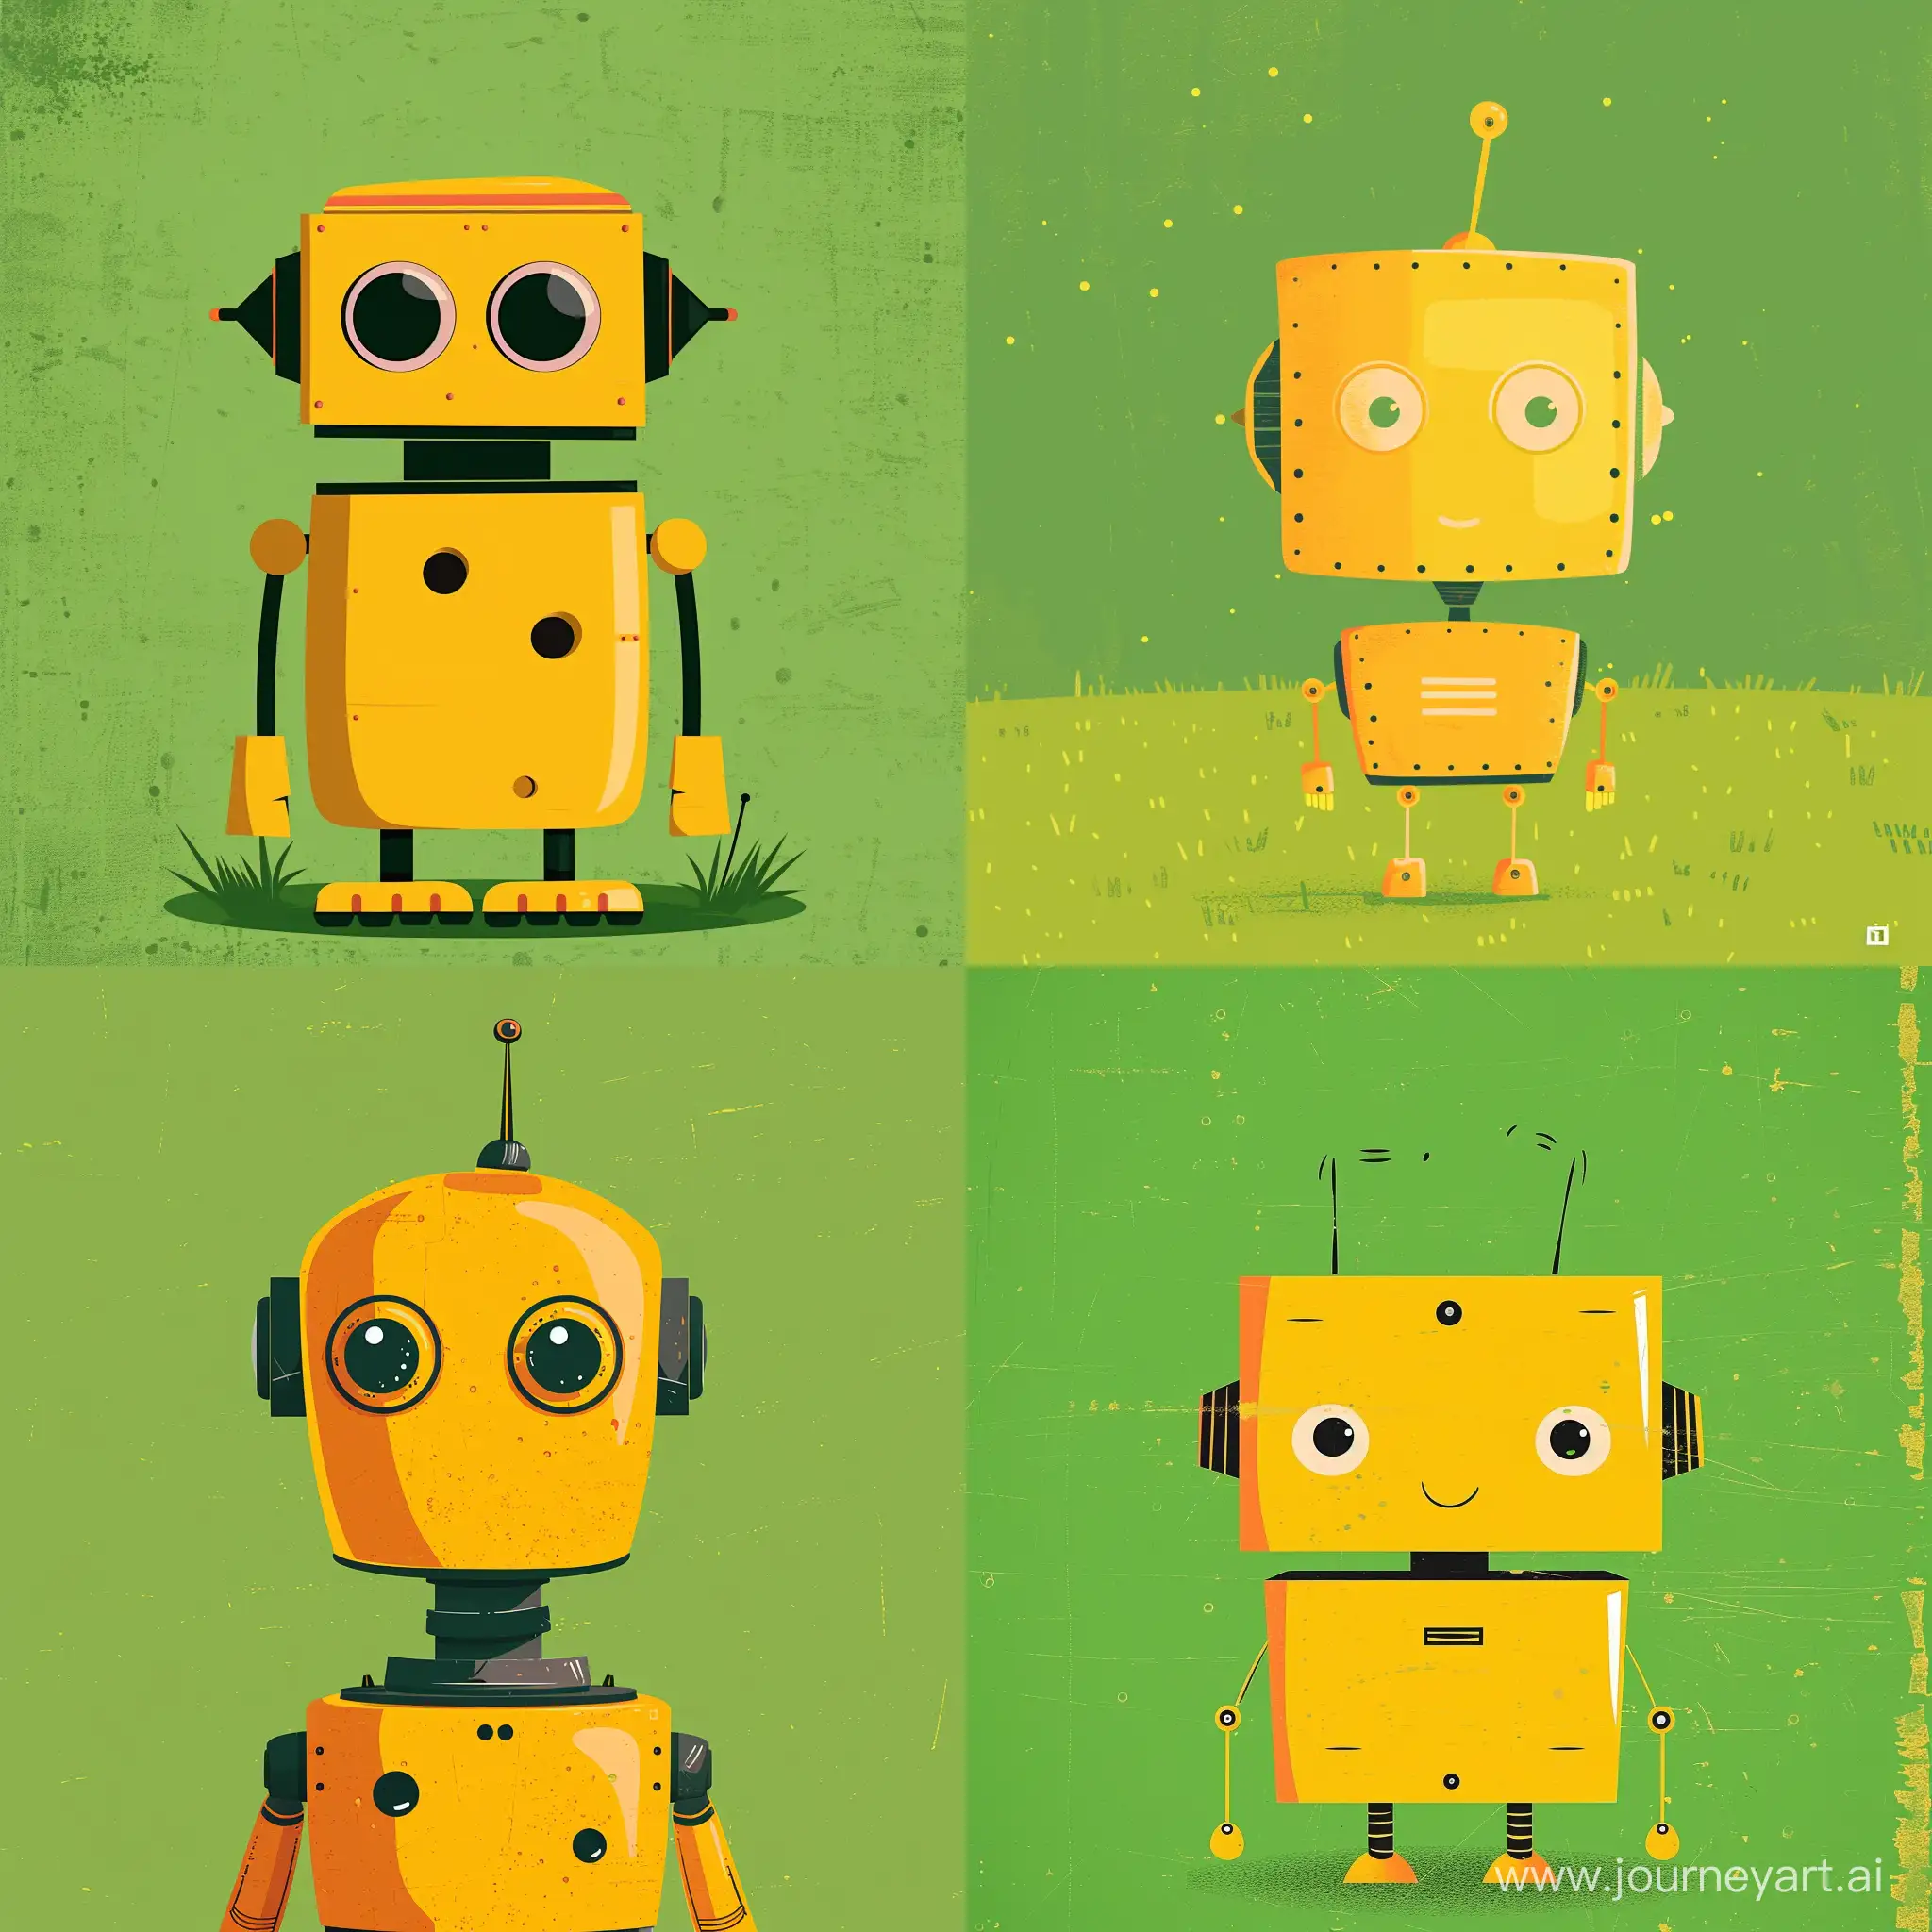 Whimsical-Minimalist-Yellow-Robot-on-Green-Background